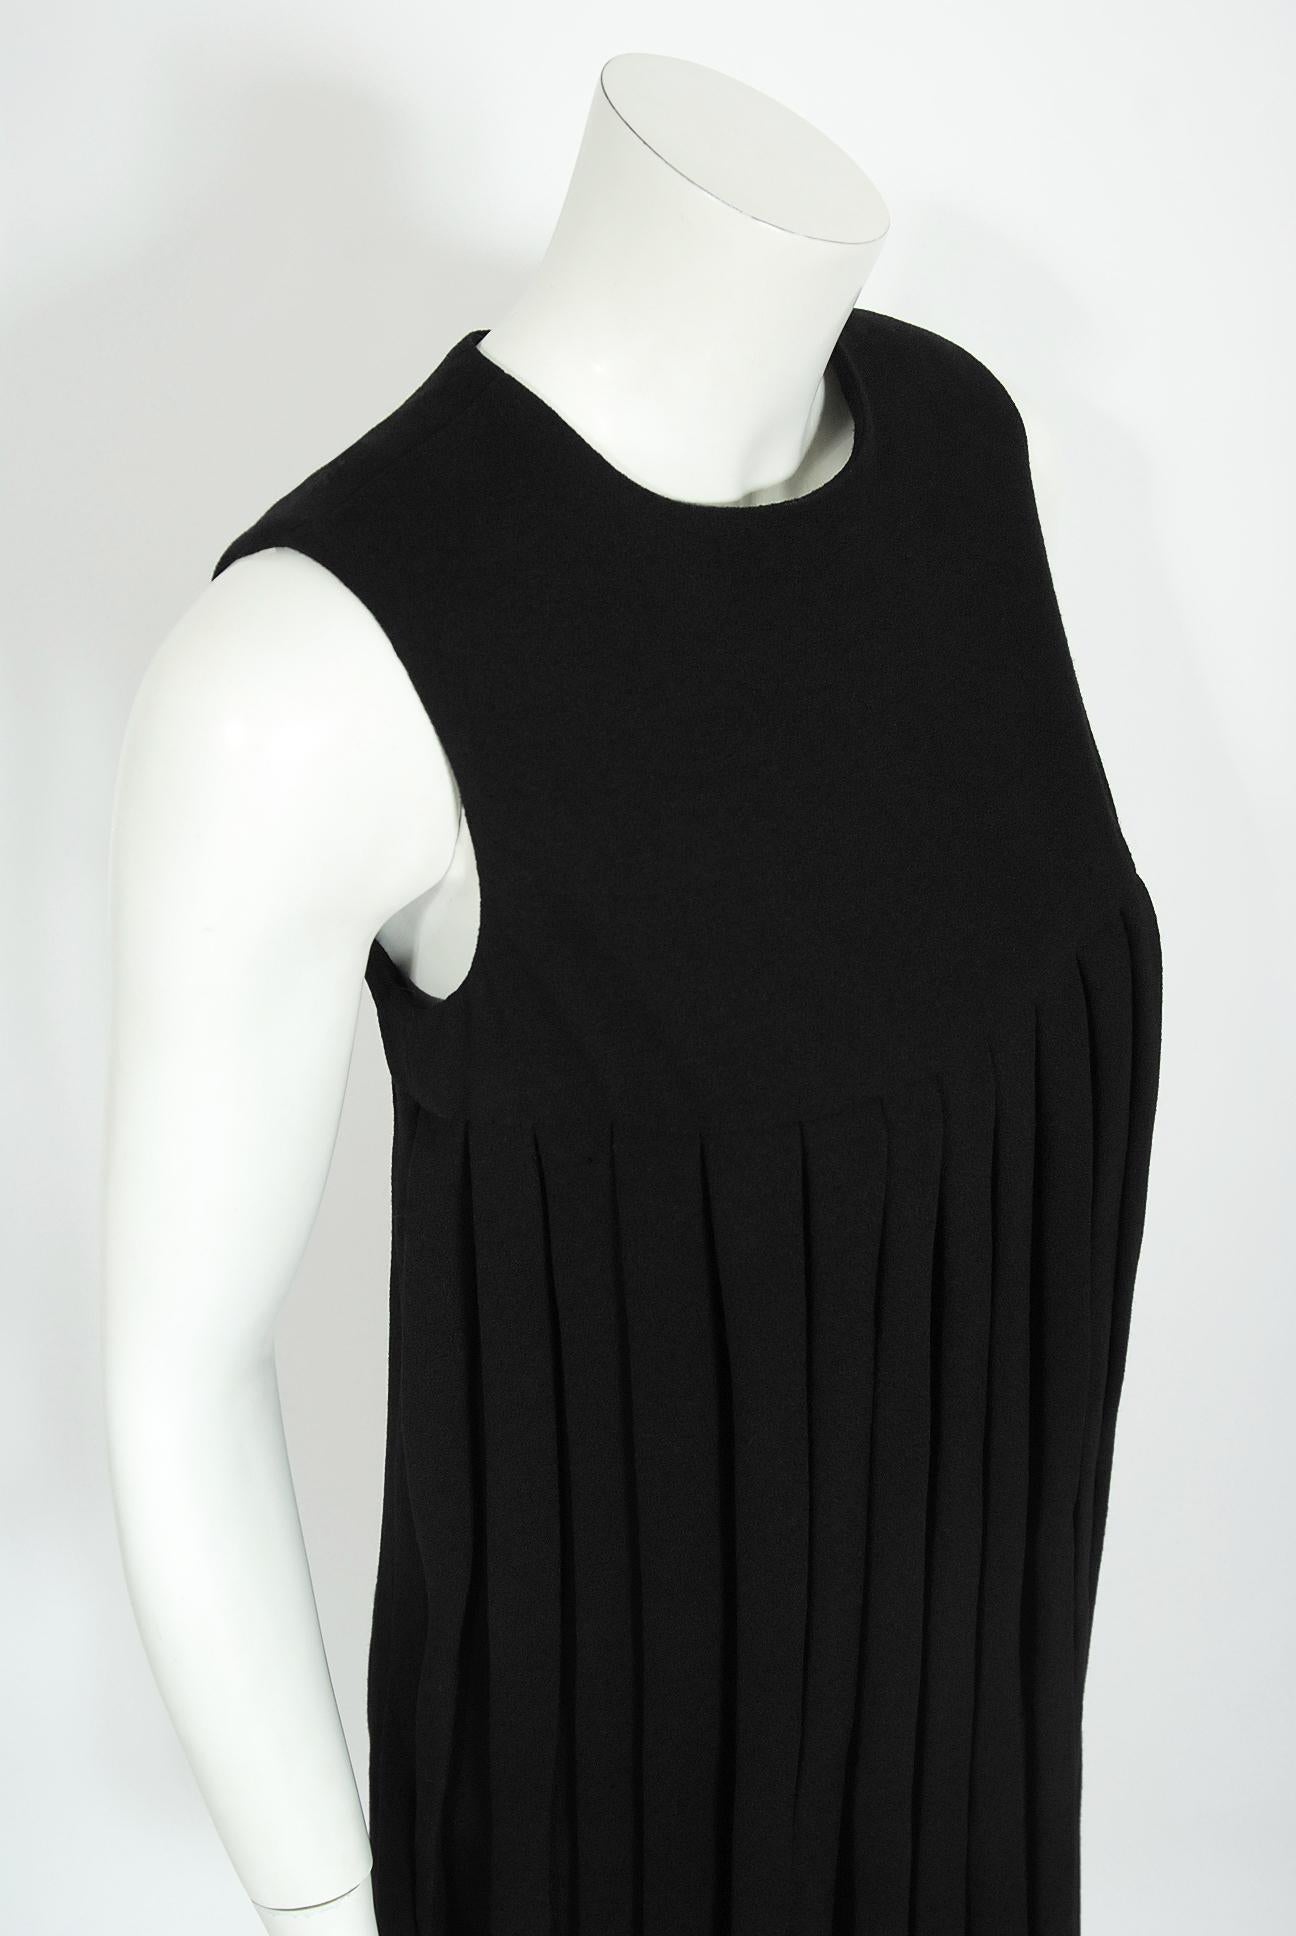 Vintage 1967 Pierre Cardin Documented Black Wool Space-Age Mod Carwash Dress 1